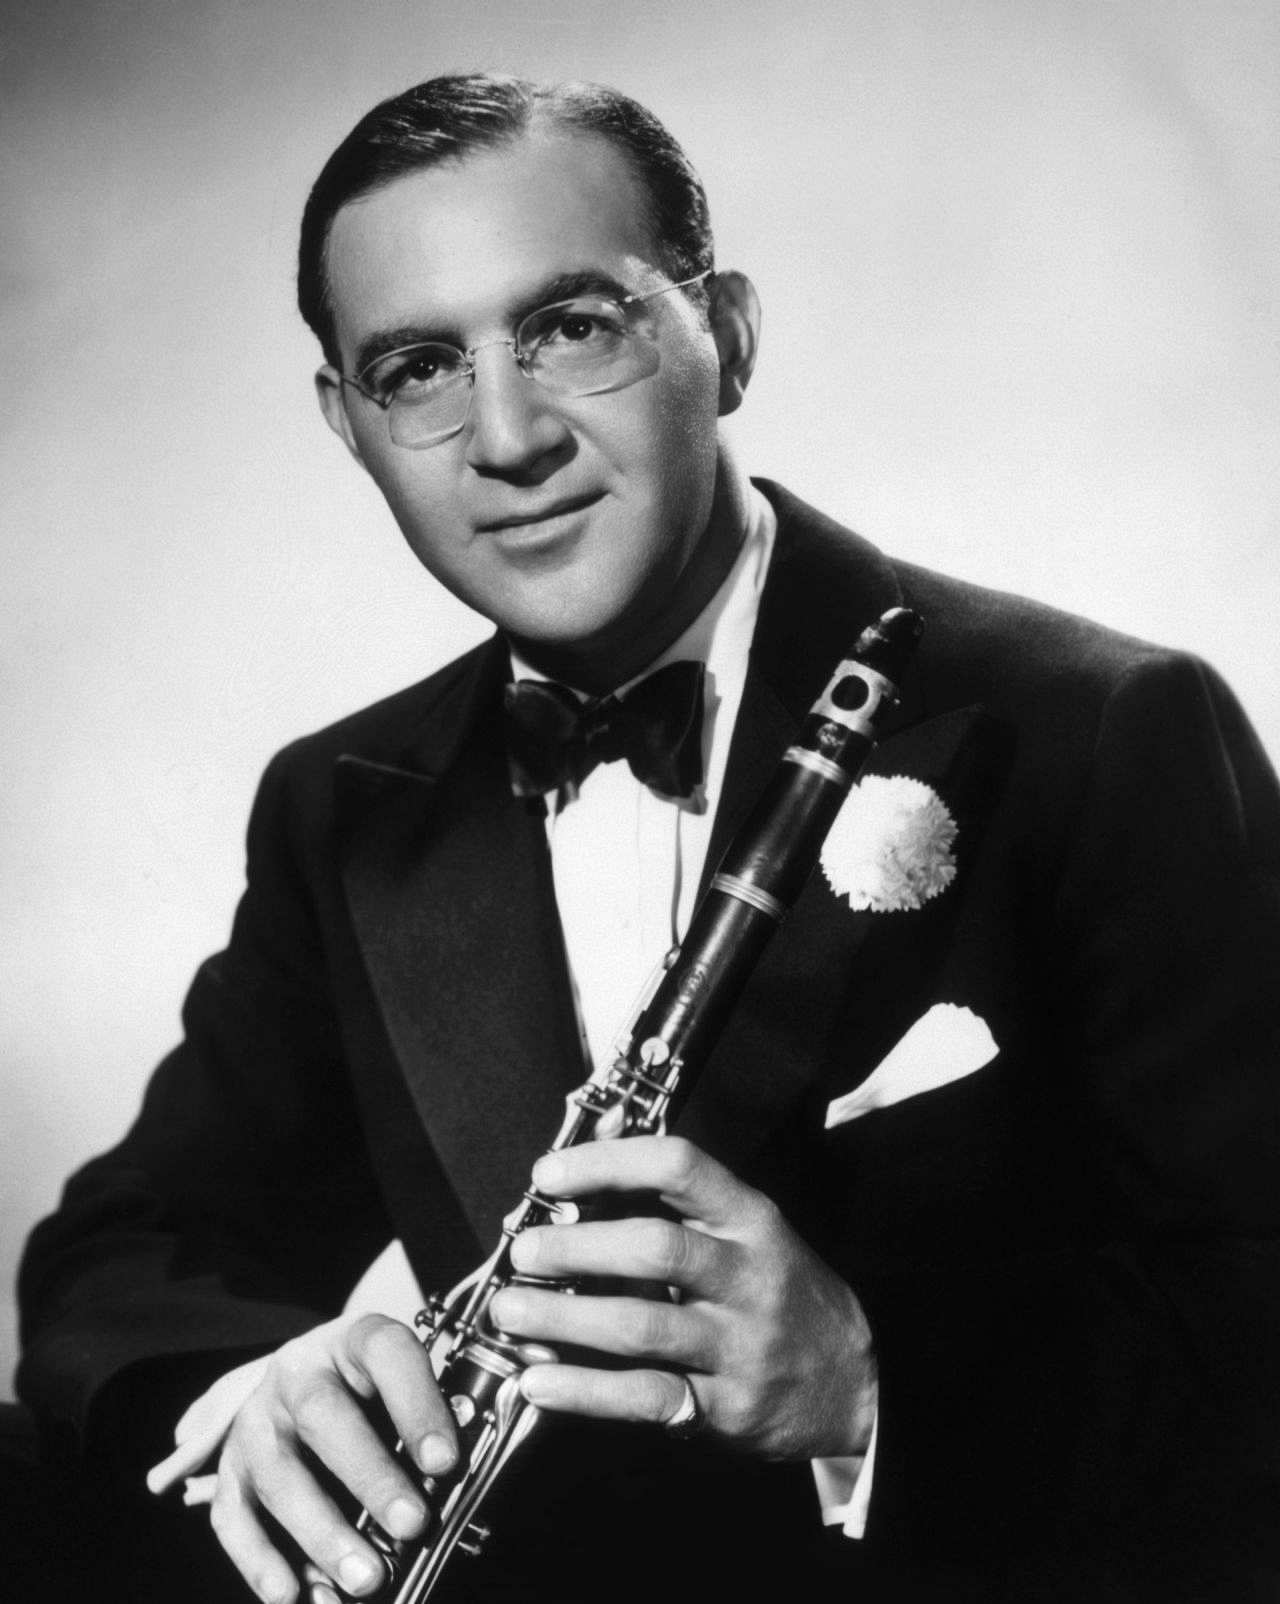 Porträtbild des Jazz- und Swingmusikers Benny Goodman, 1943.